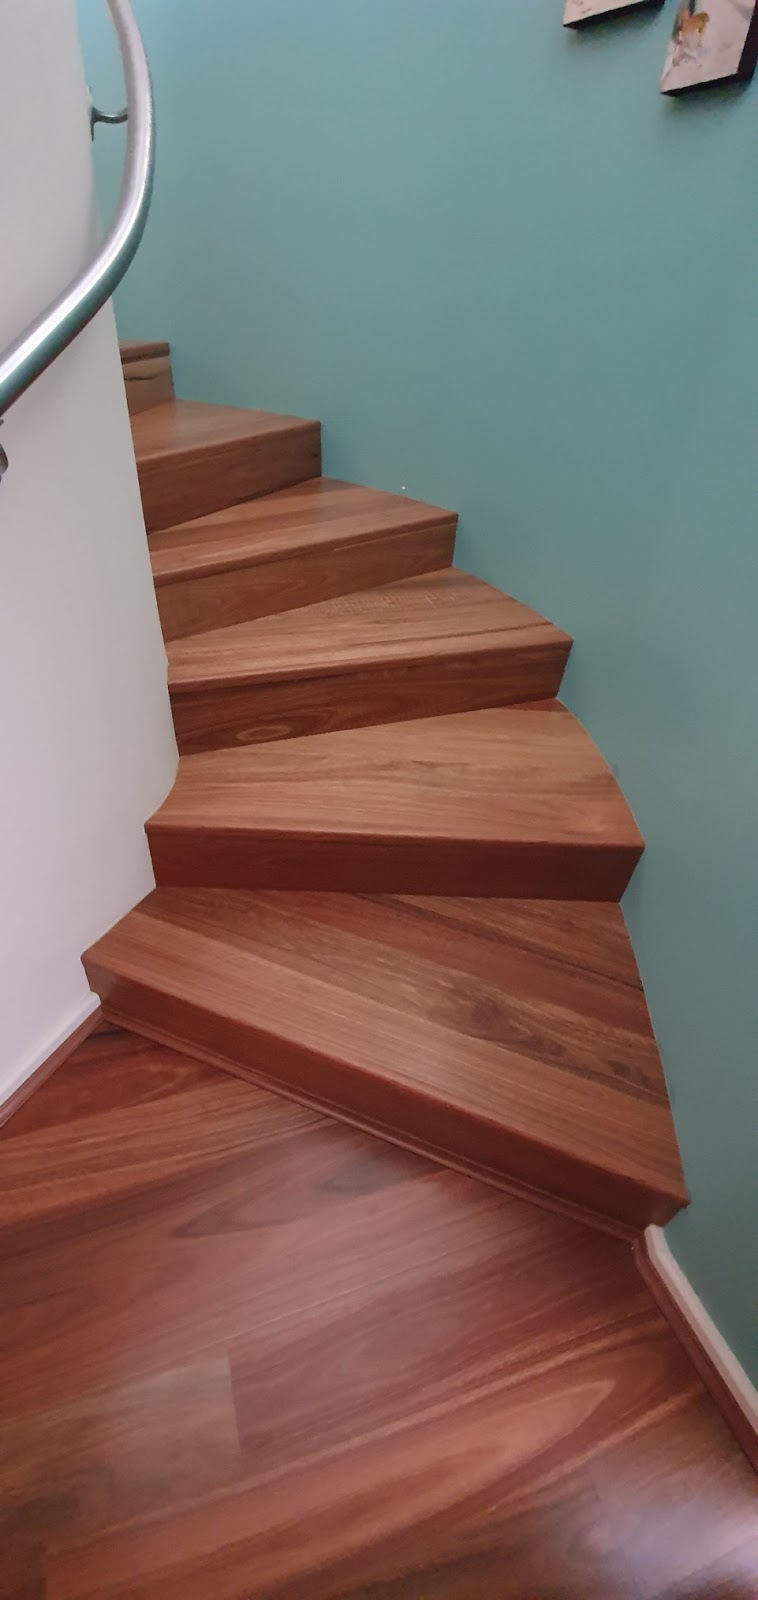 LayRite Timber Flooring | 4 Ashdown Wy, Hilbert WA 6112, Australia | Phone: 0432 409 180